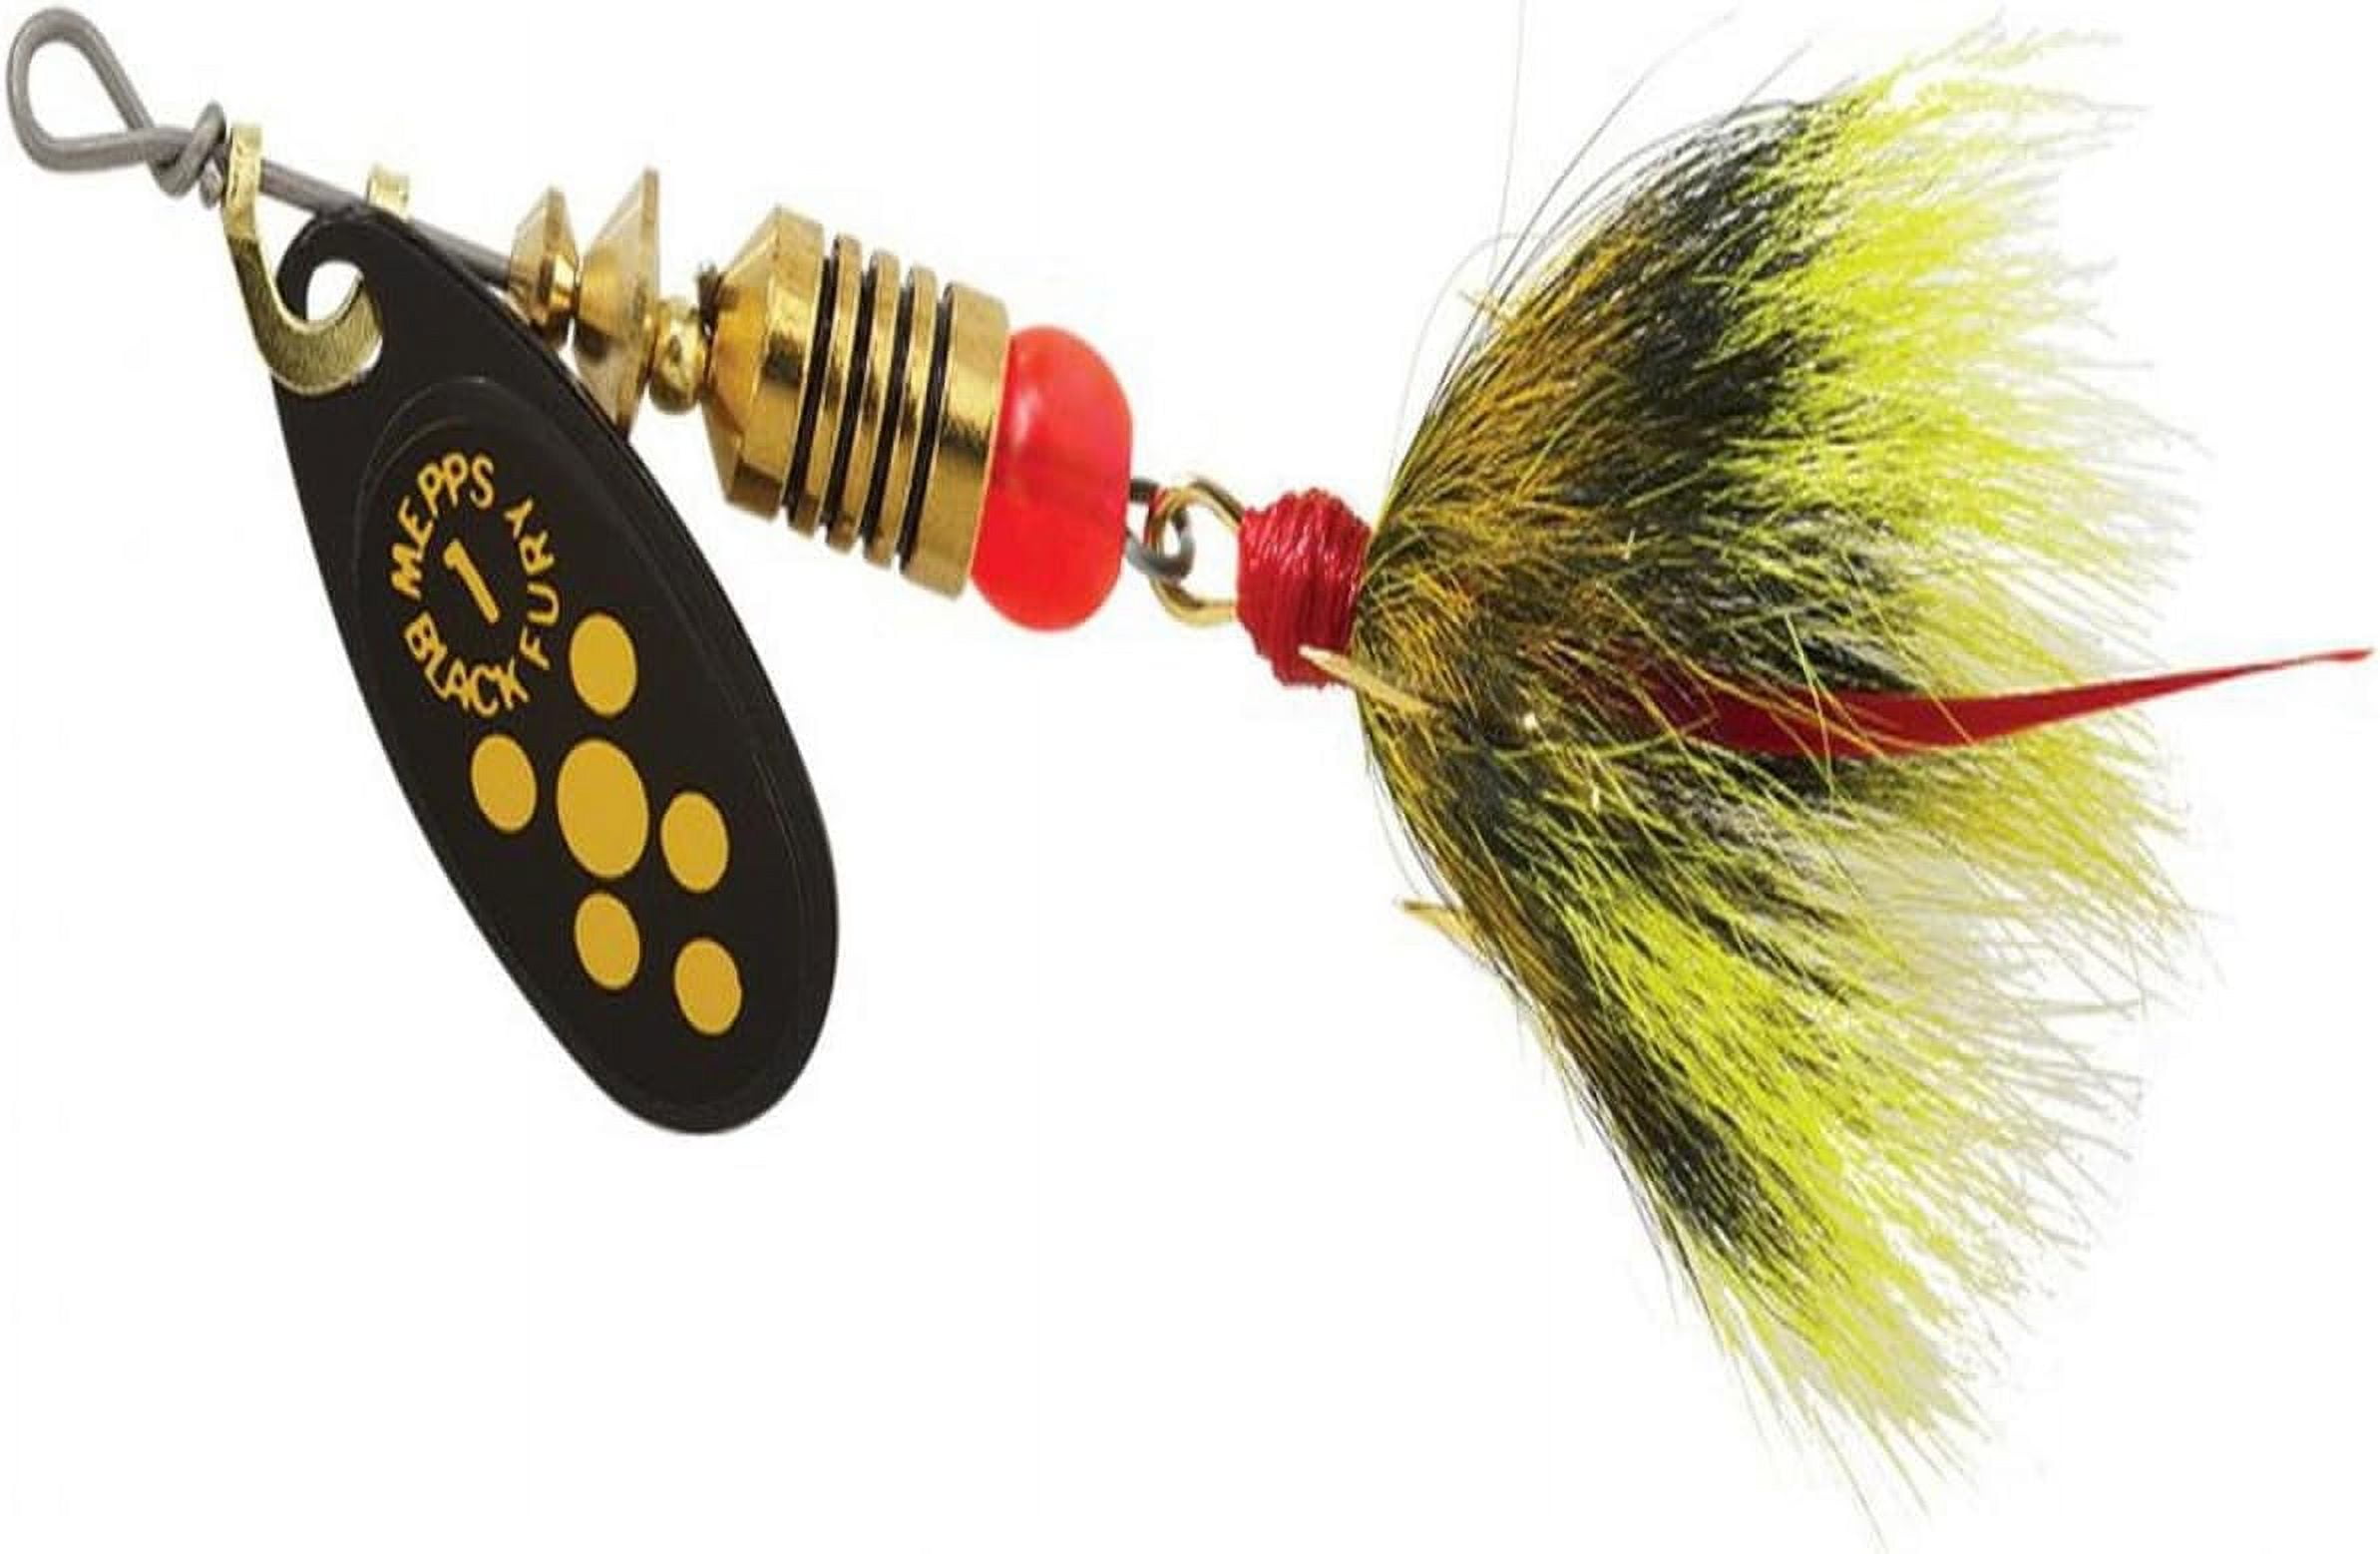 Mepps Black Fury Dressed Treble Spinner Fishing Lure, Yellow, 1/8 oz 